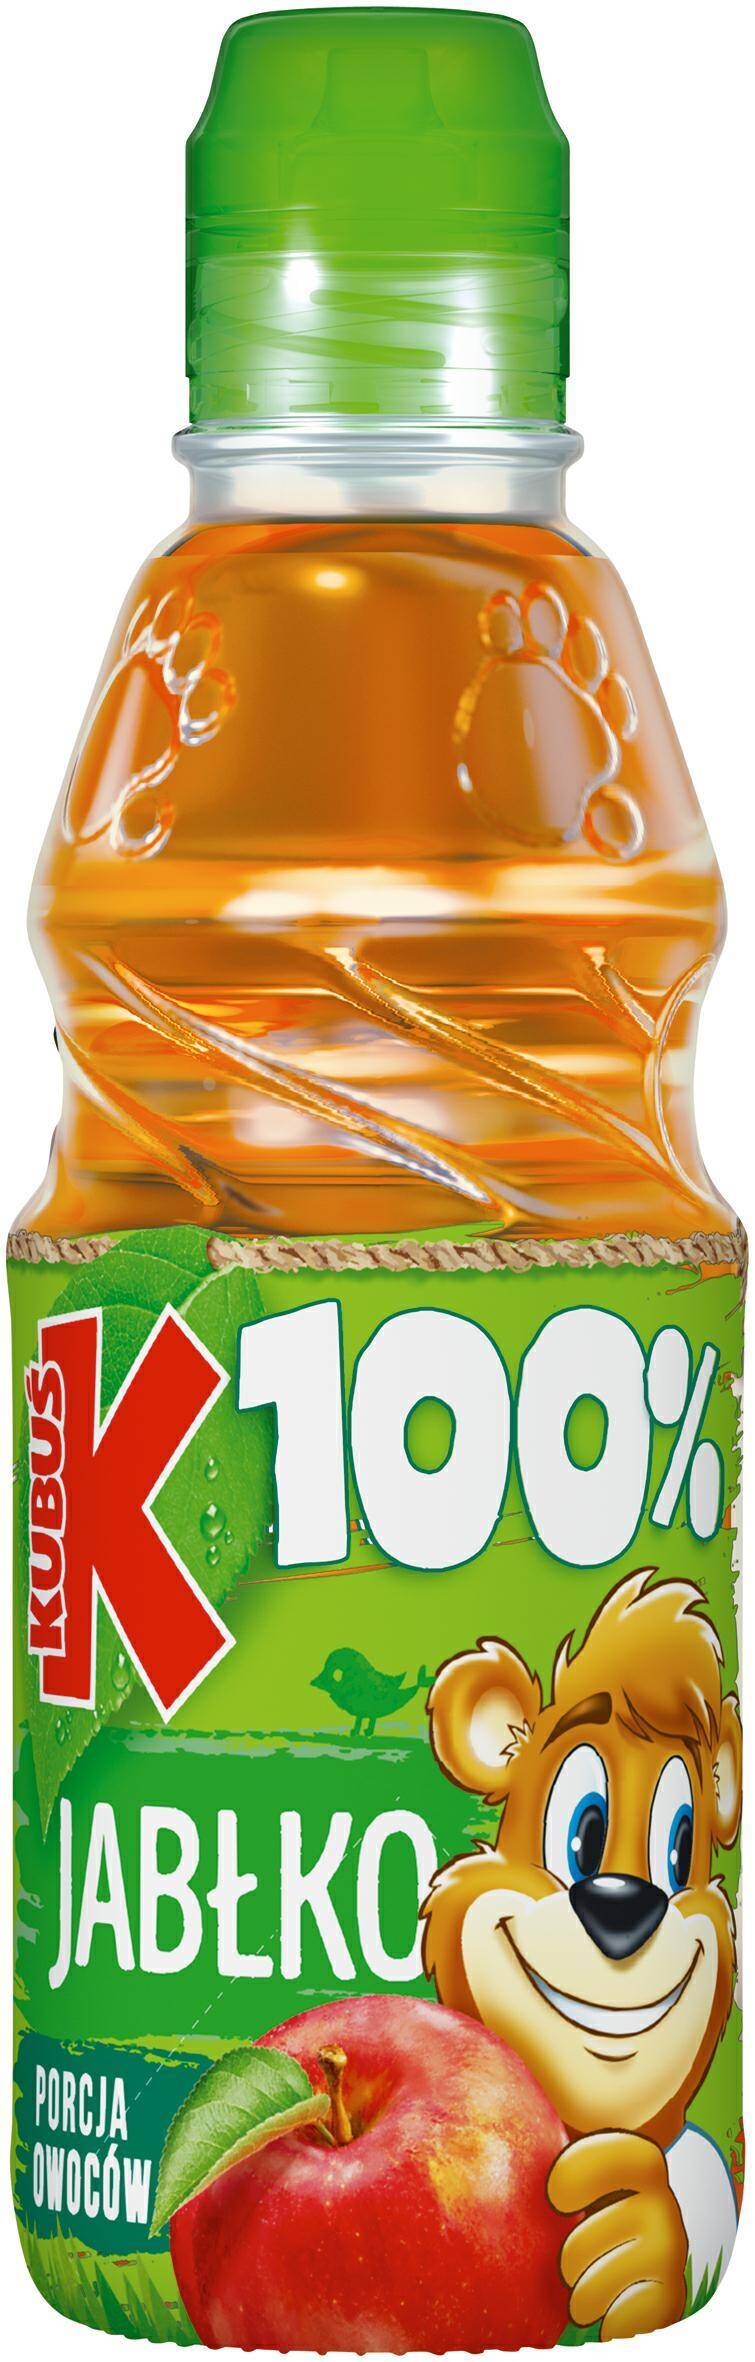 KUBUS GO-jabłko 100% 0,3l sok*12.